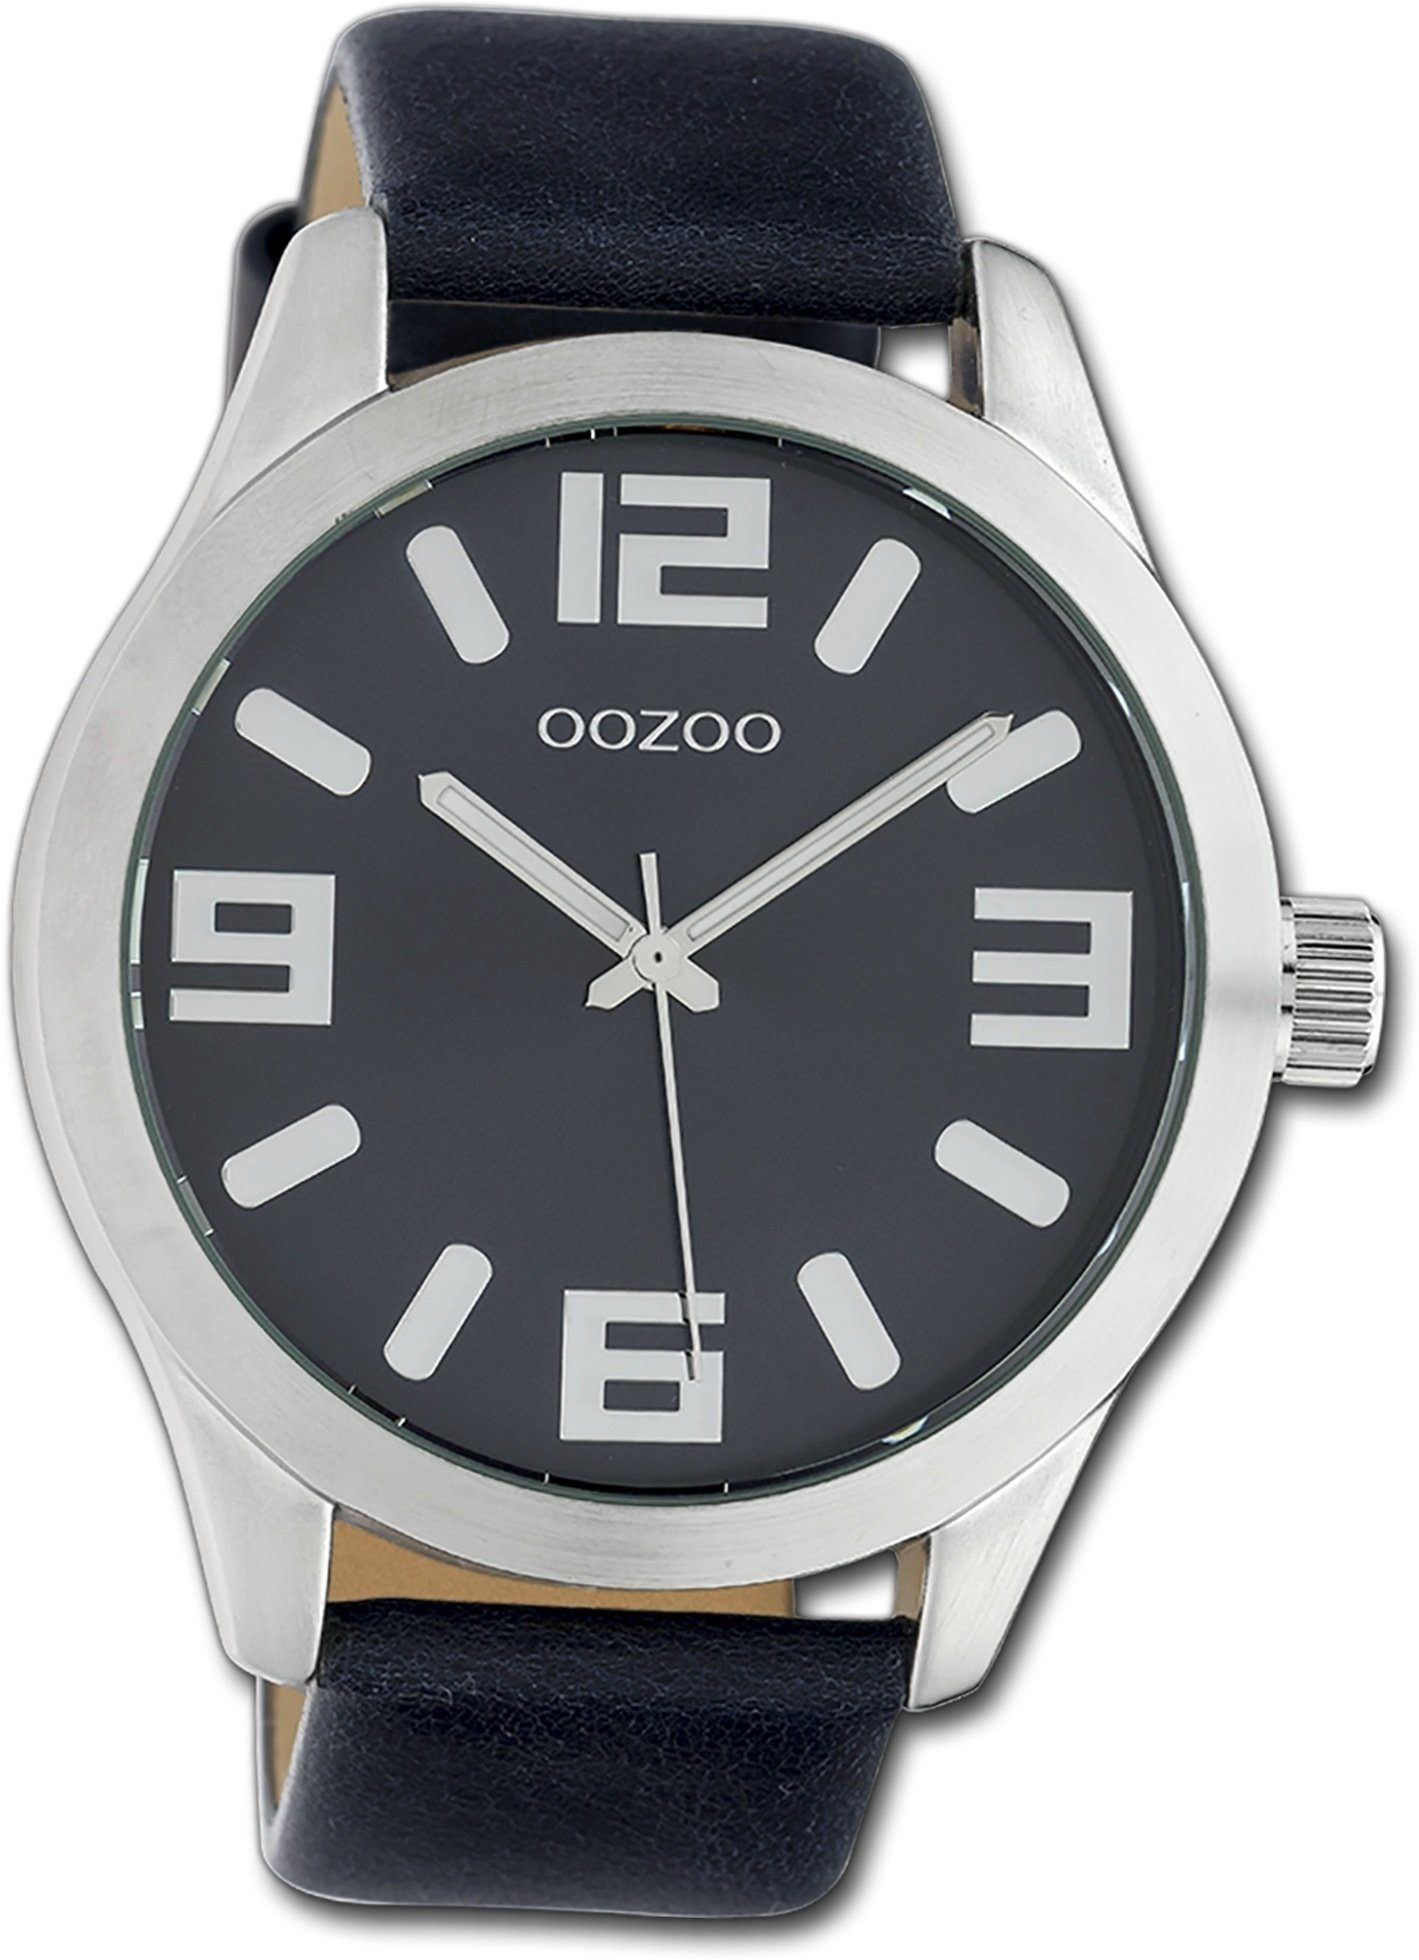 Damen, dunkelblau, rundes Gehäuse, Herrenuhr Timepieces, OOZOO groß Oozoo (46mm) Armbanduhr Lederarmband Quarzuhr